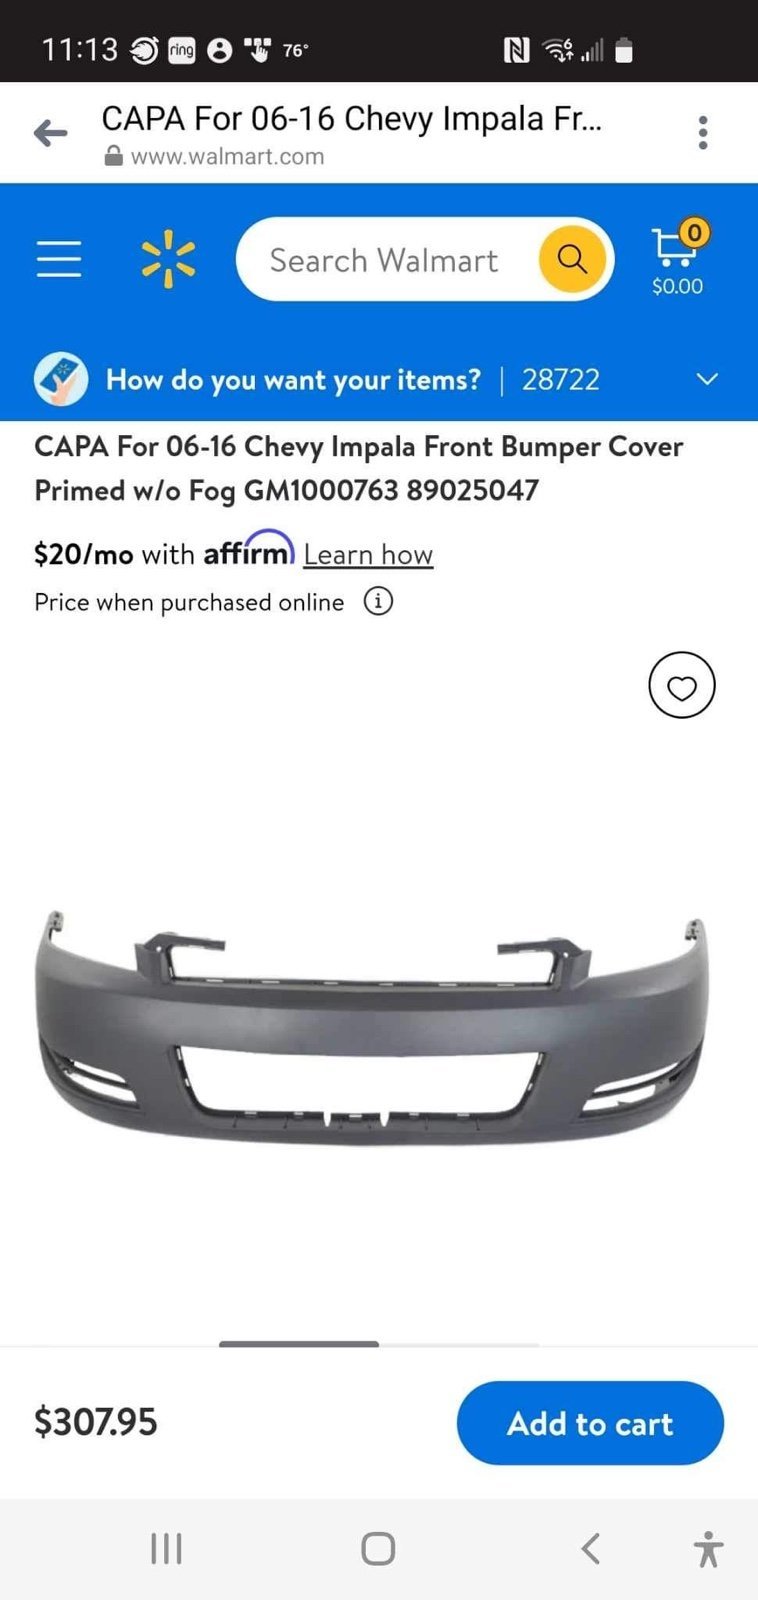 New! CAPA For 06-16 Chevy Impala Front Bumper Cover mi5pjfIZa